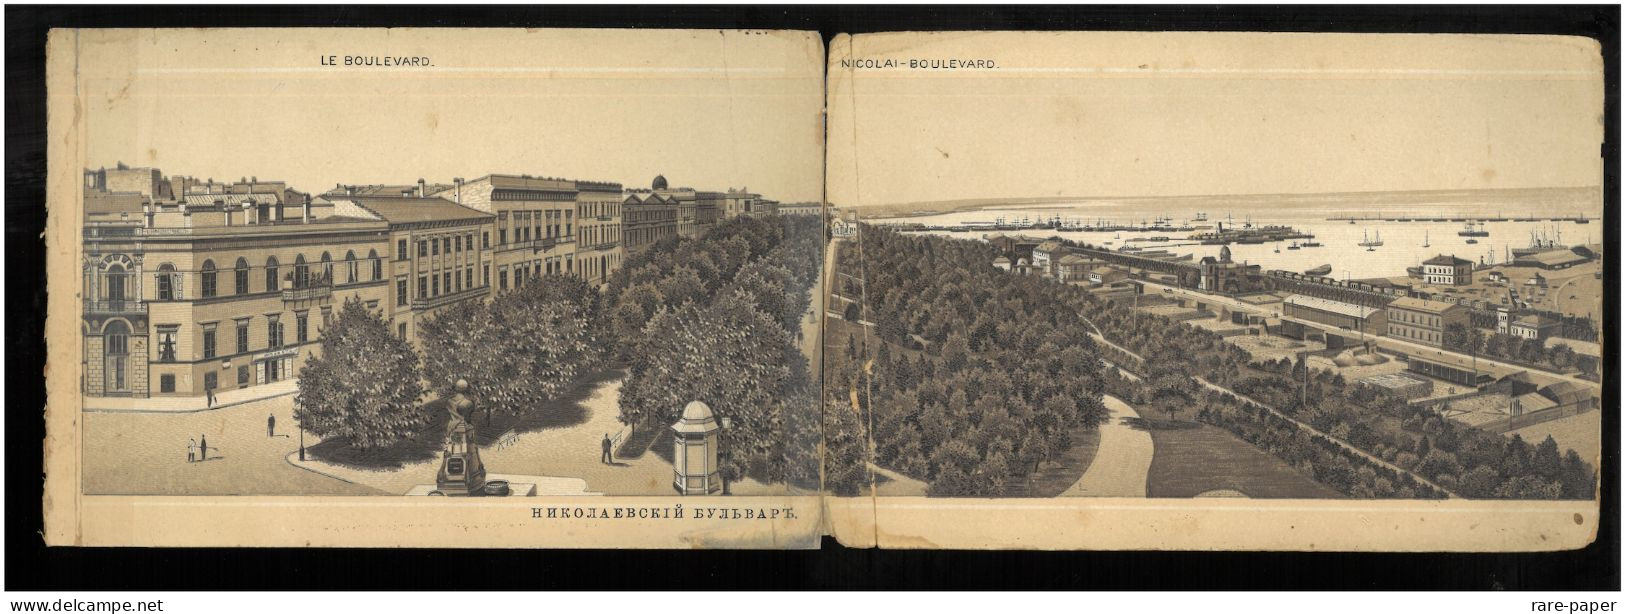 Russian Album "ОДЕССА - Souvenir d'Odessa" (Odesa, Ukraine) 25 x Early Lithographs, circa 1890s (19.5 x 13 cm)